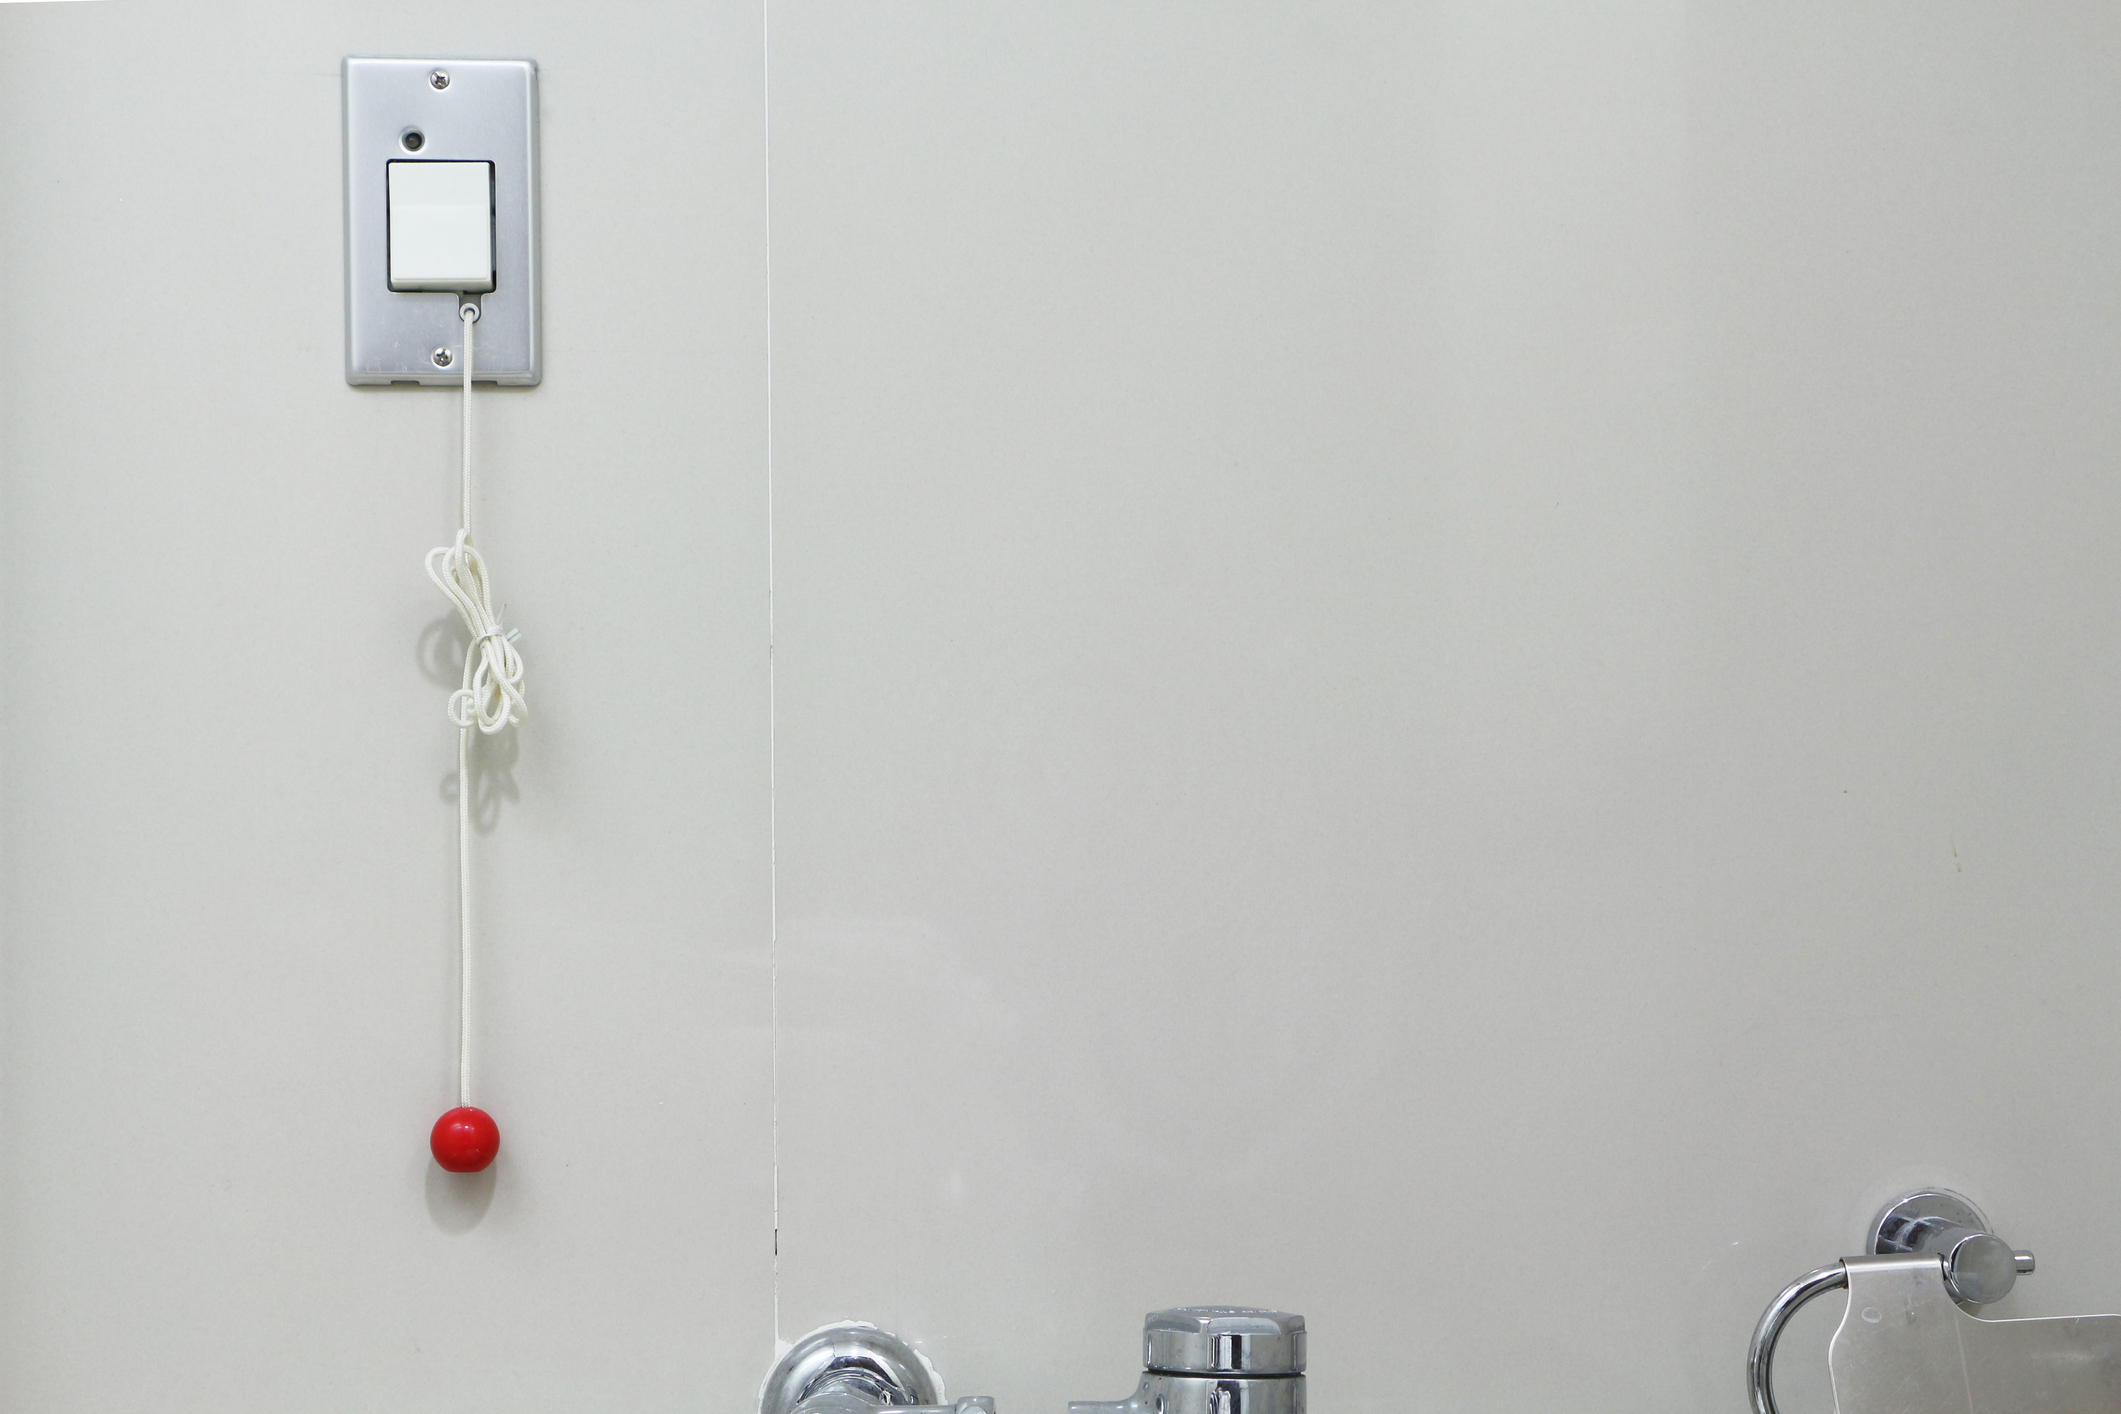 Emergency pull cord in bathroom stall